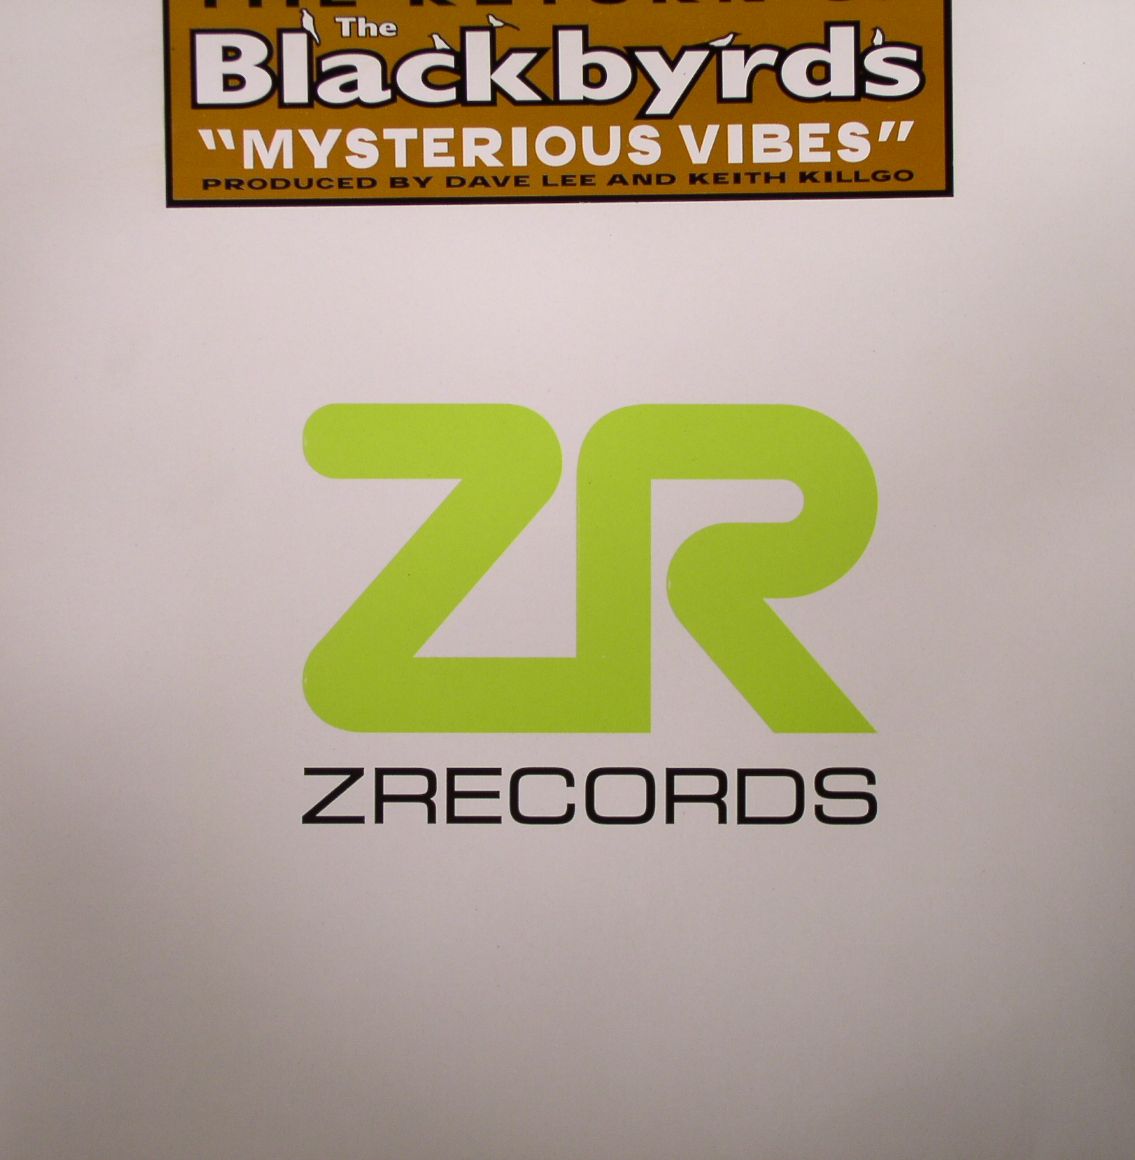 BLACKBYRDS, The - Mysterious Vibes (Dave Lee/Keith Killgo production)